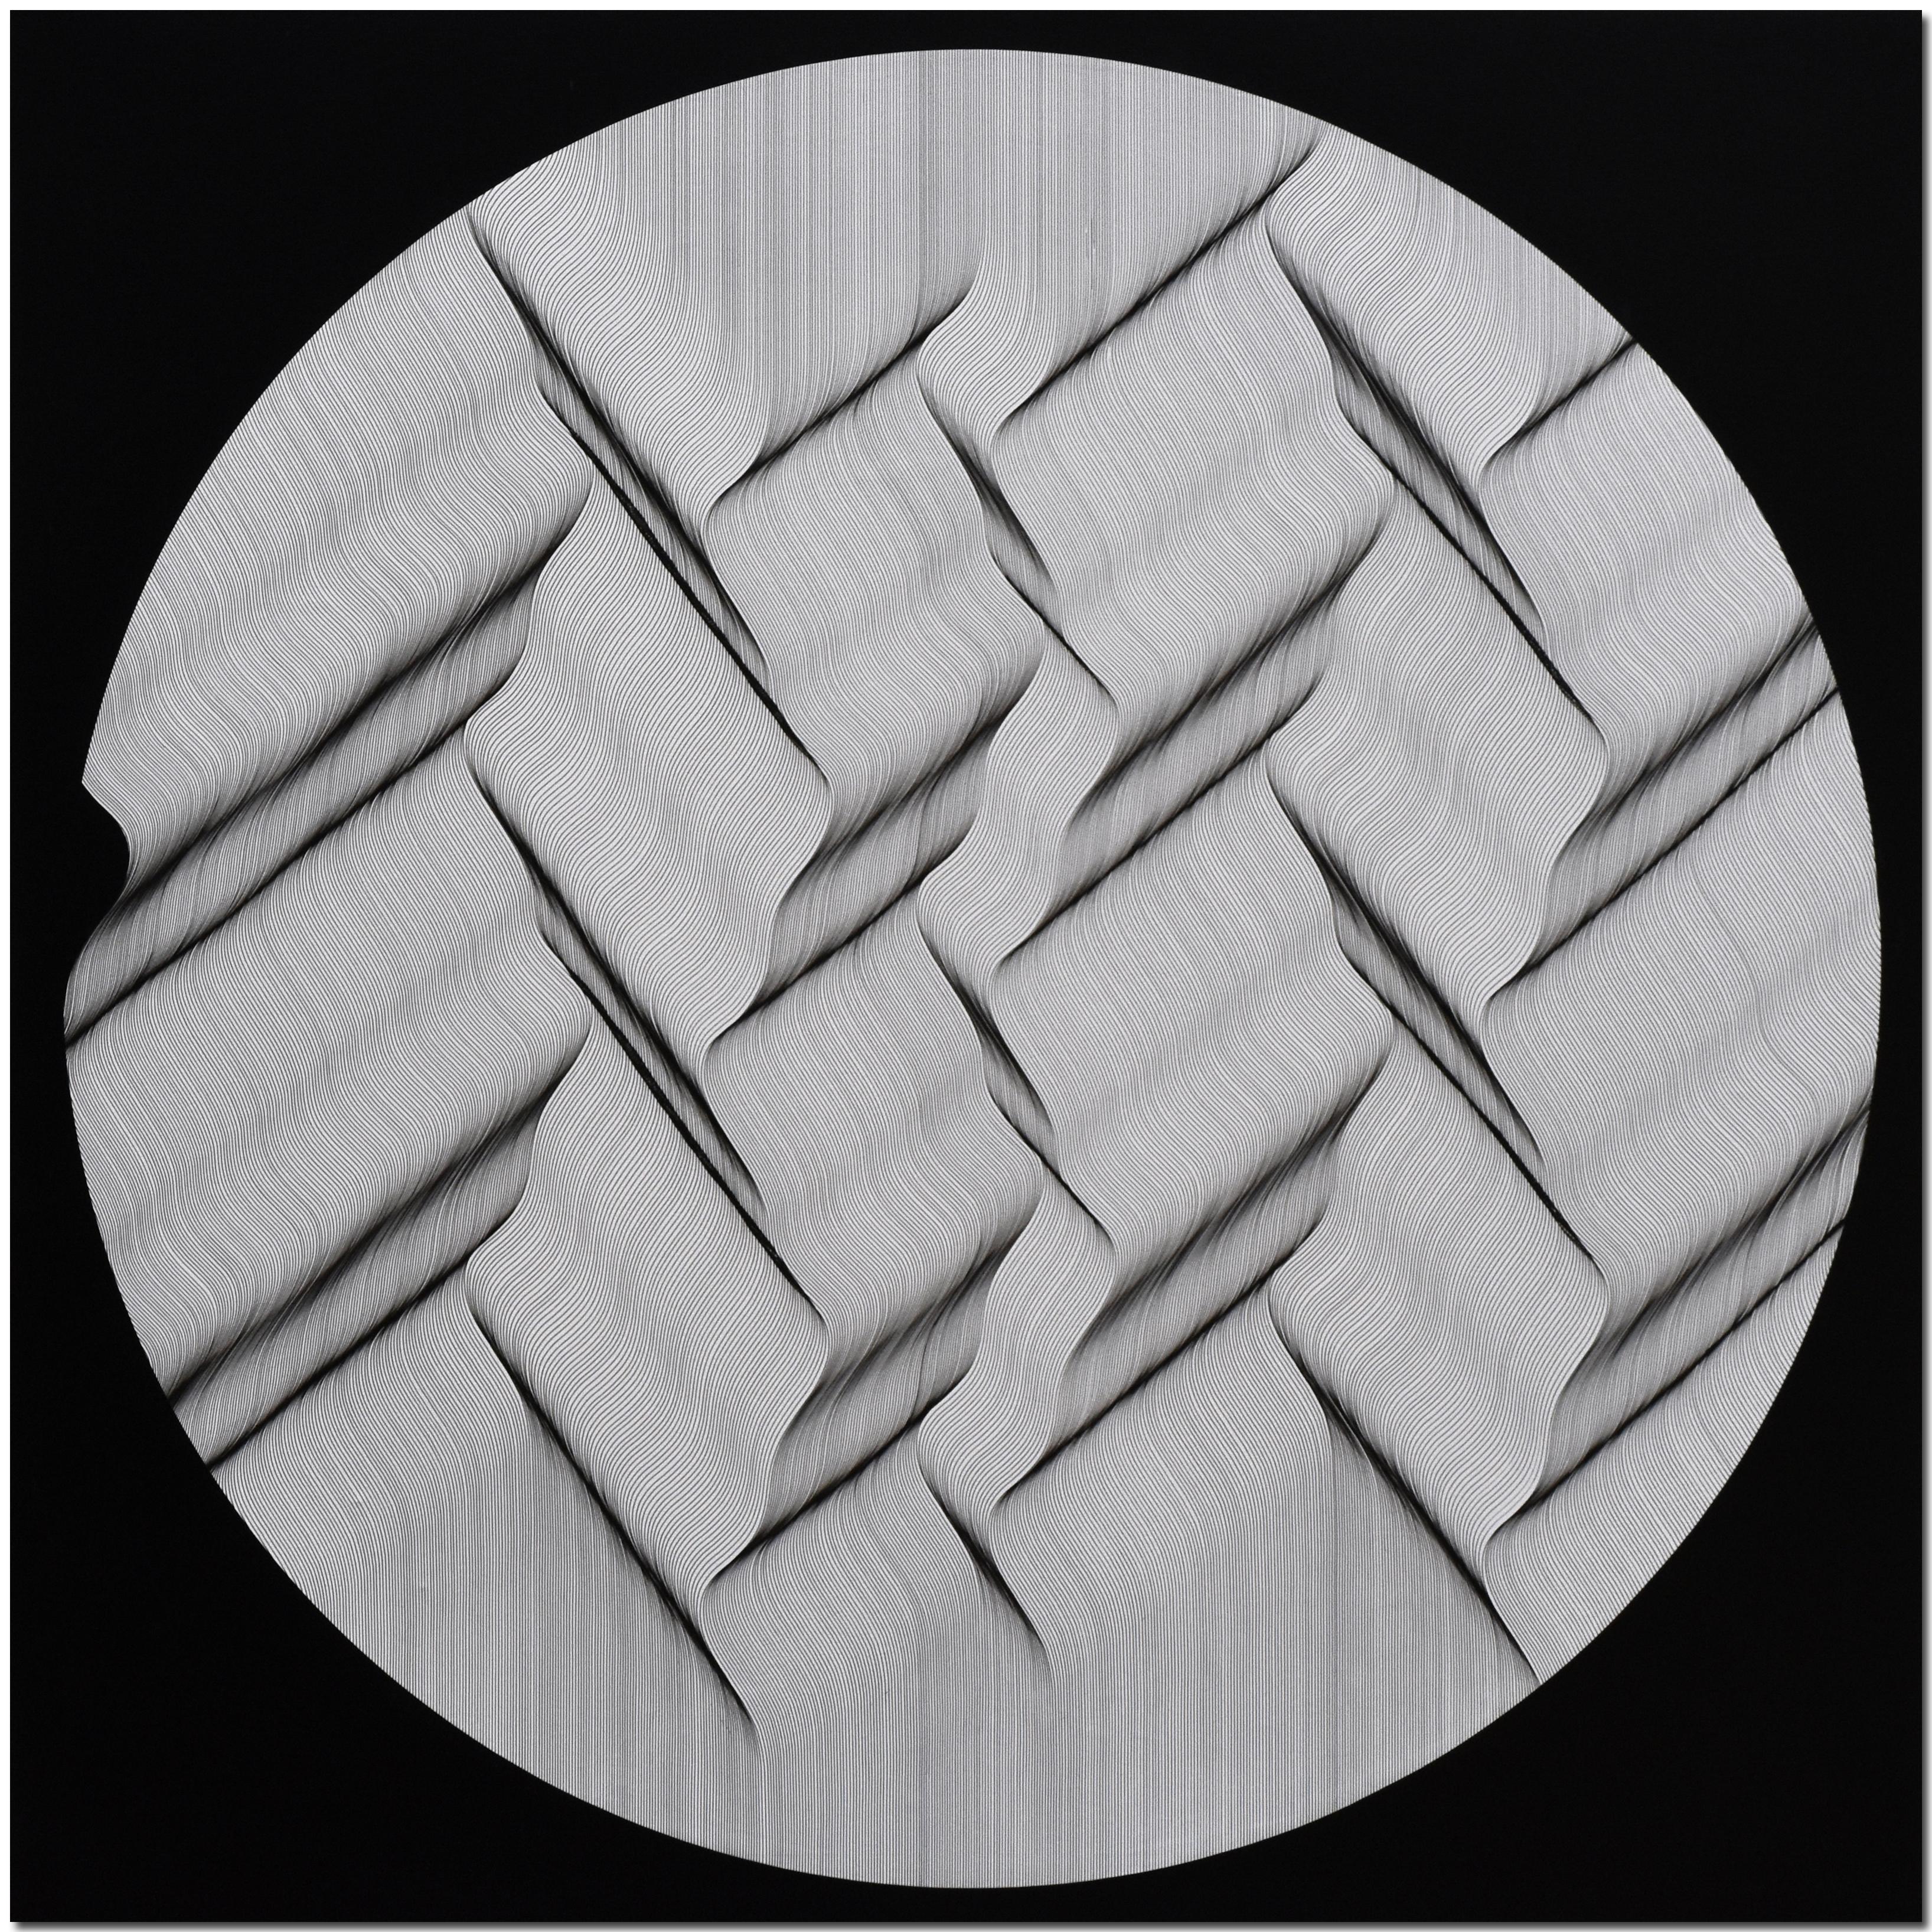 Bianco Nero 2018 - Geometric abstract painting